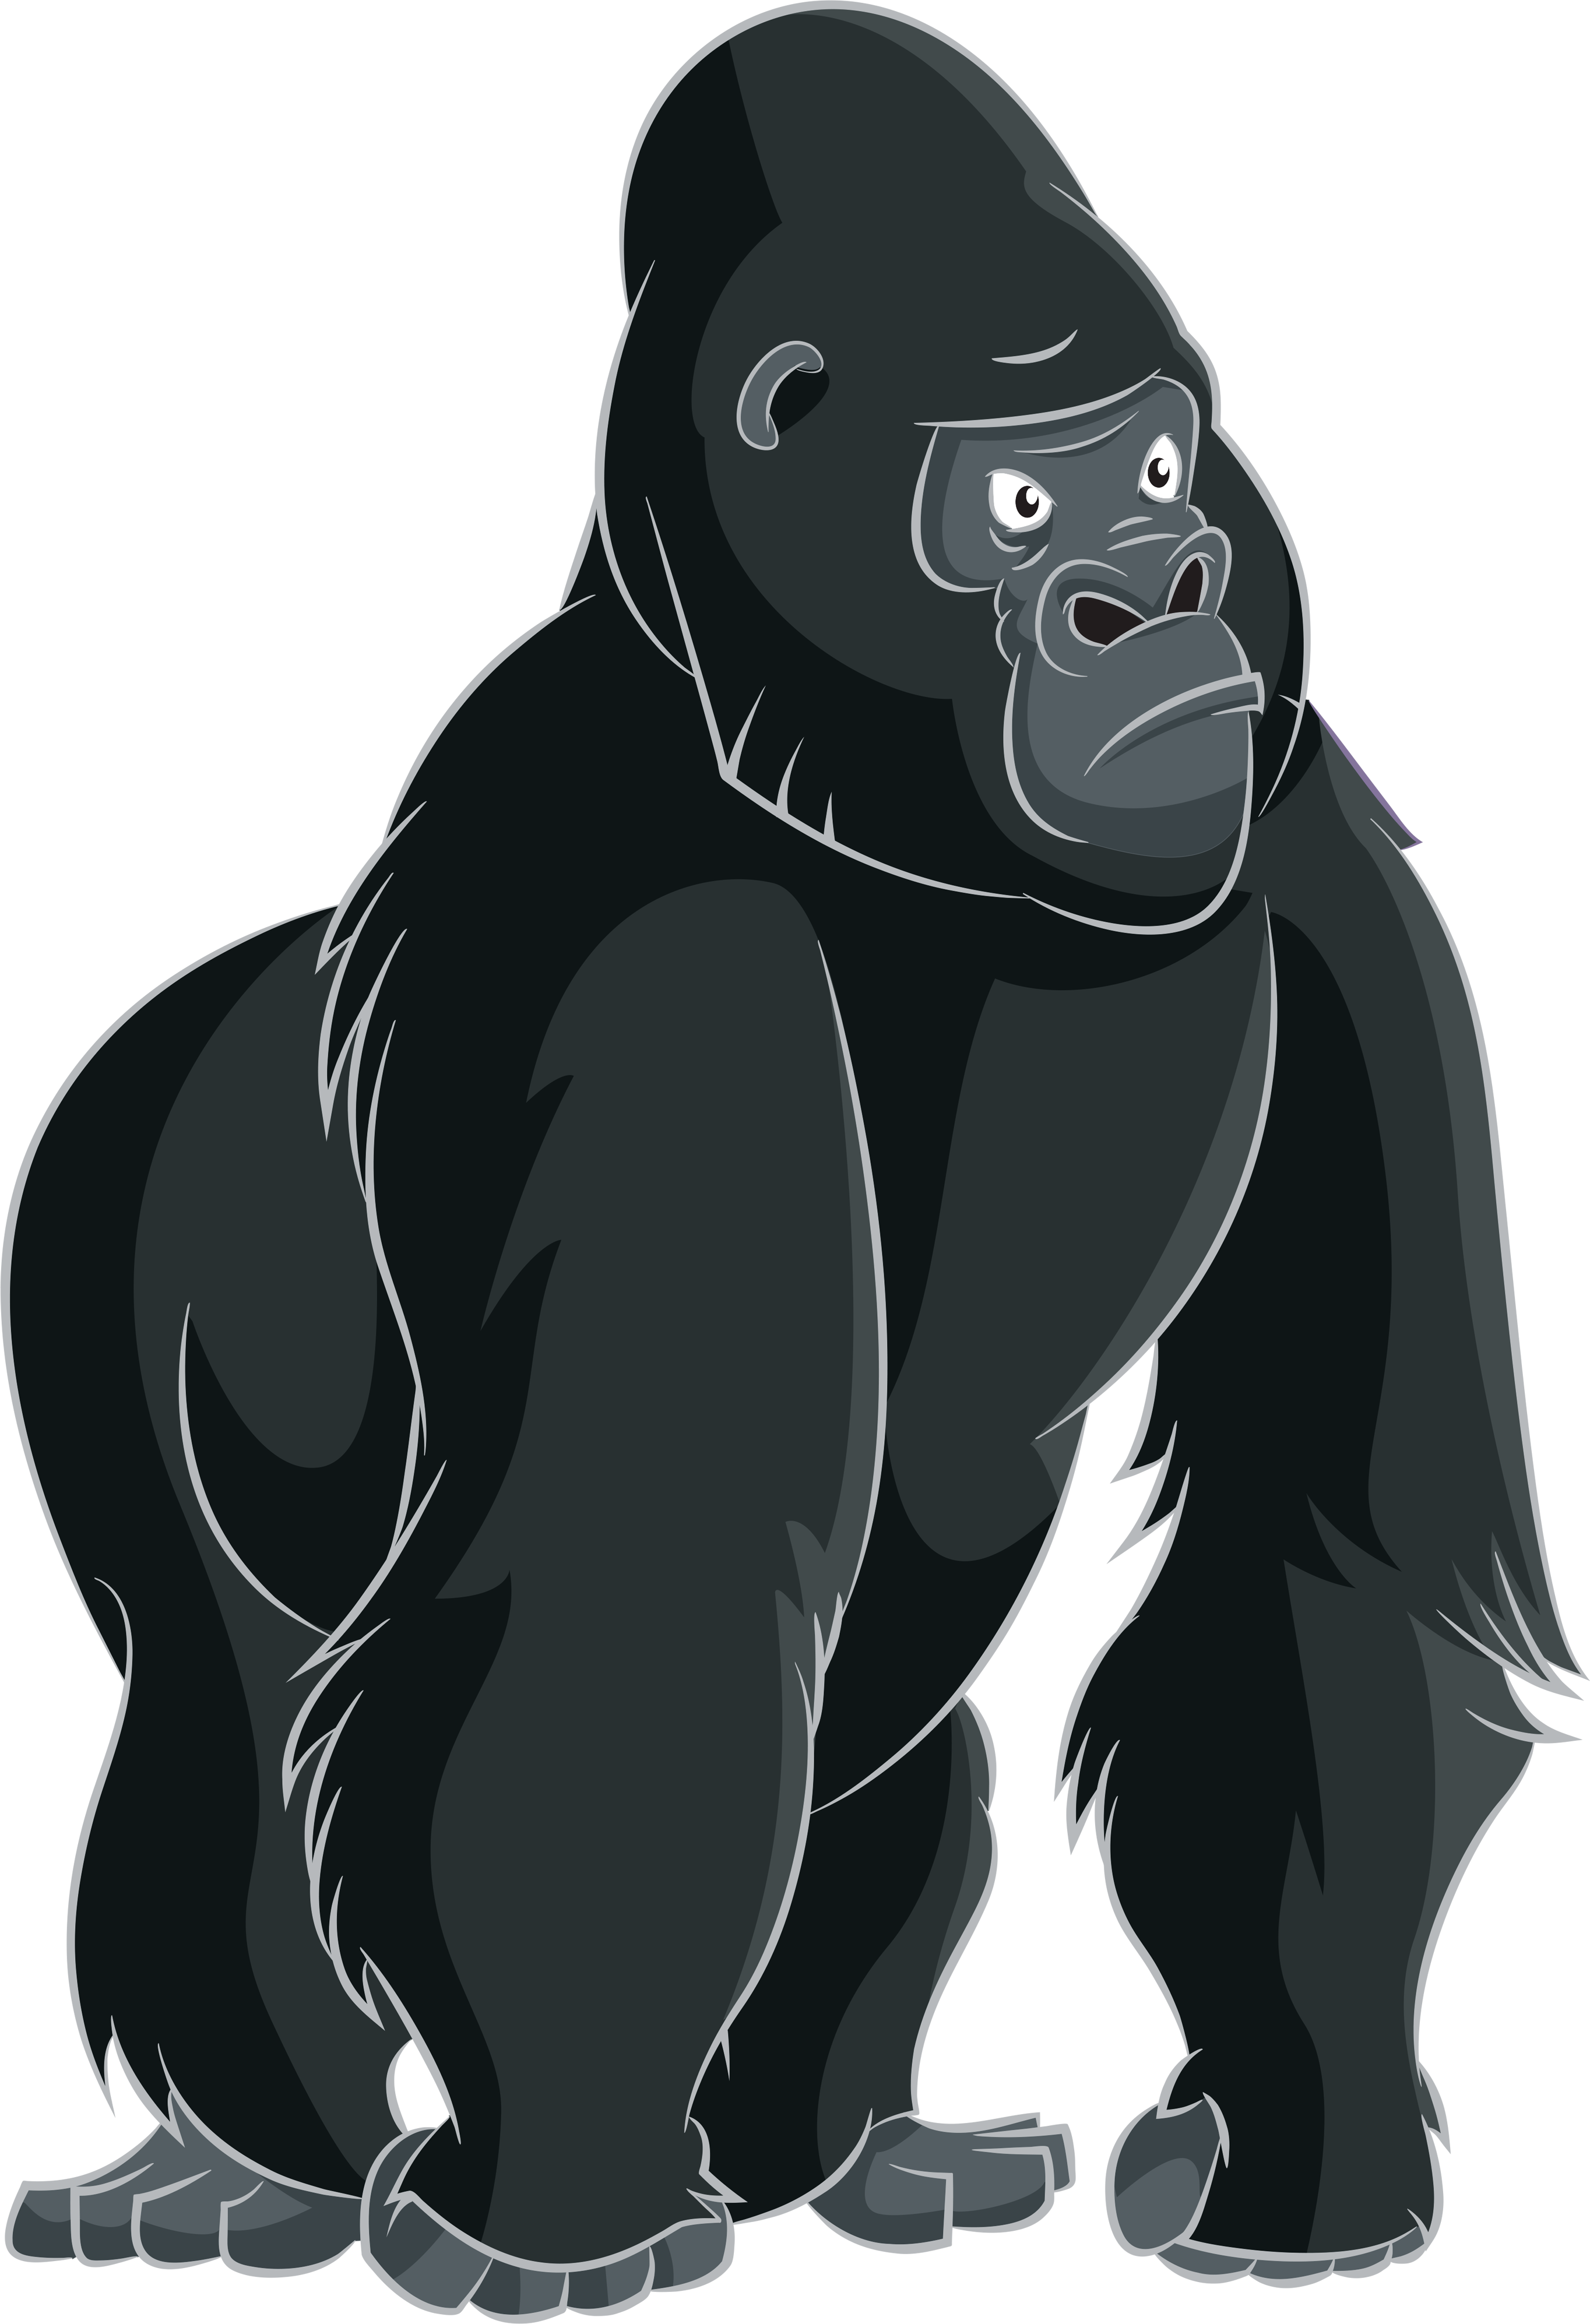 Gorilla Ape Cartoon Clip art - gorilla png download - 2728*3988 - Free ...